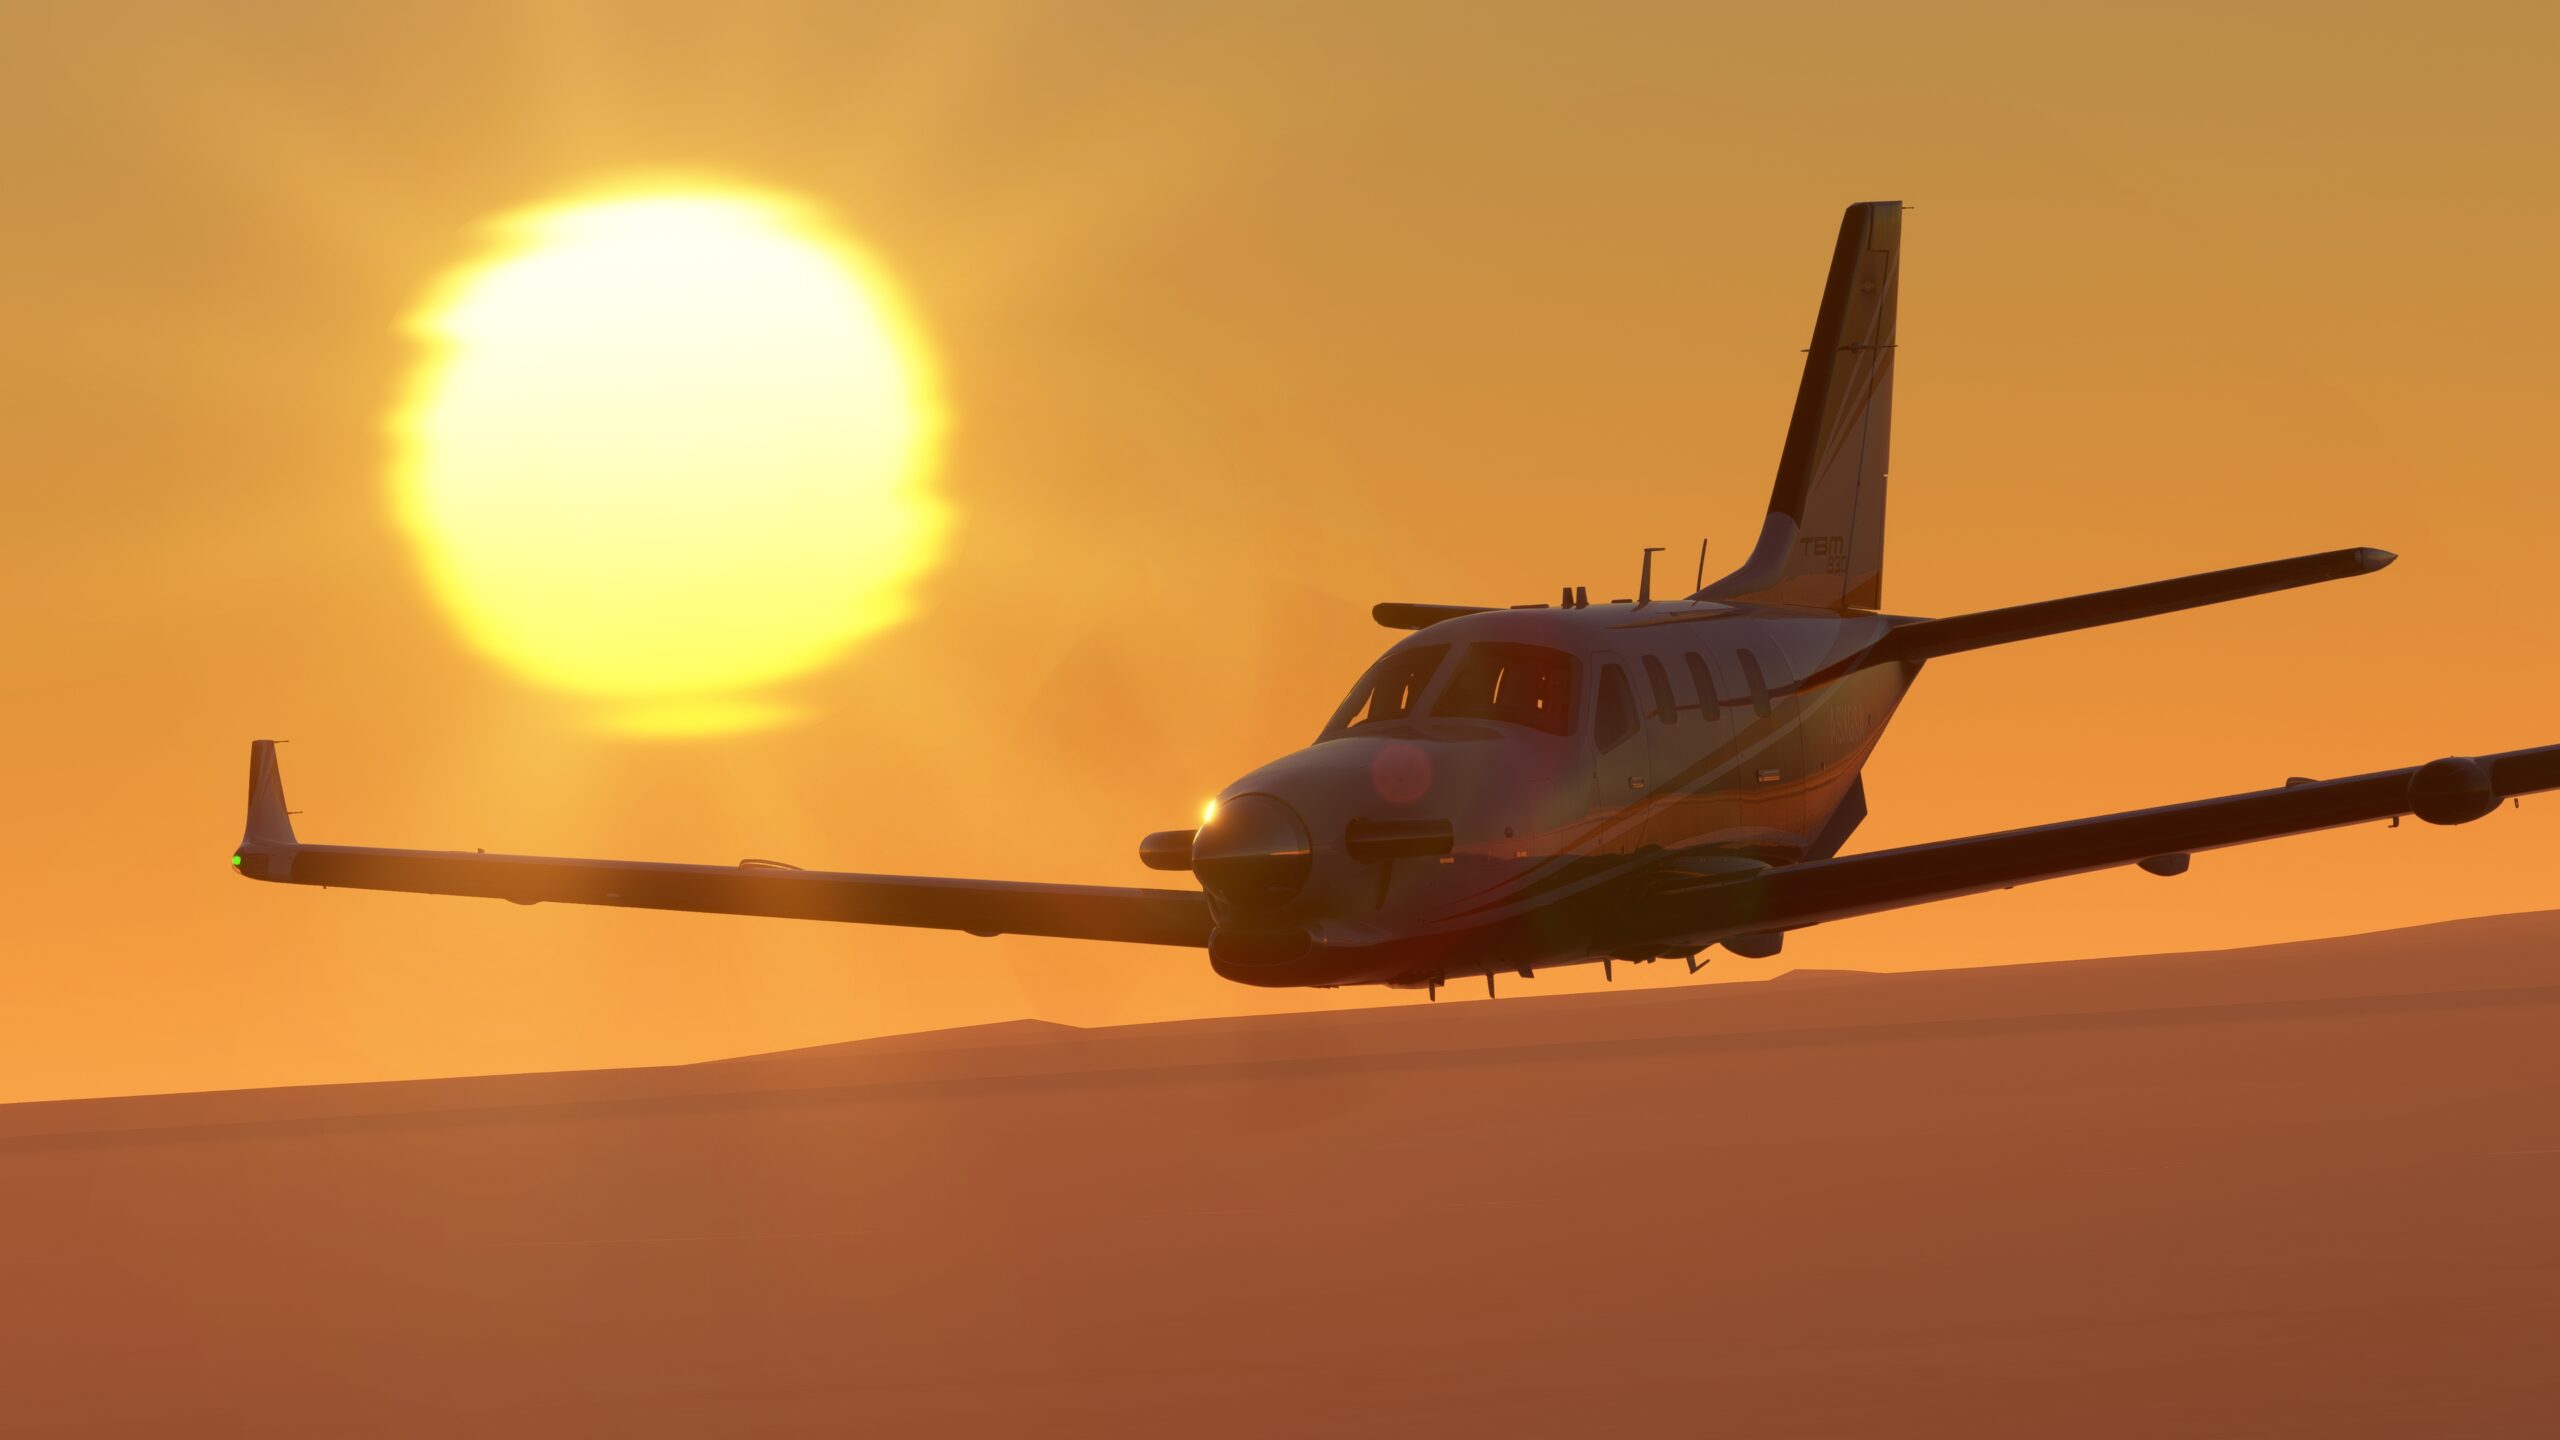 Avion Microsoft Flight Simulator volant contre un coucher de soleil orange